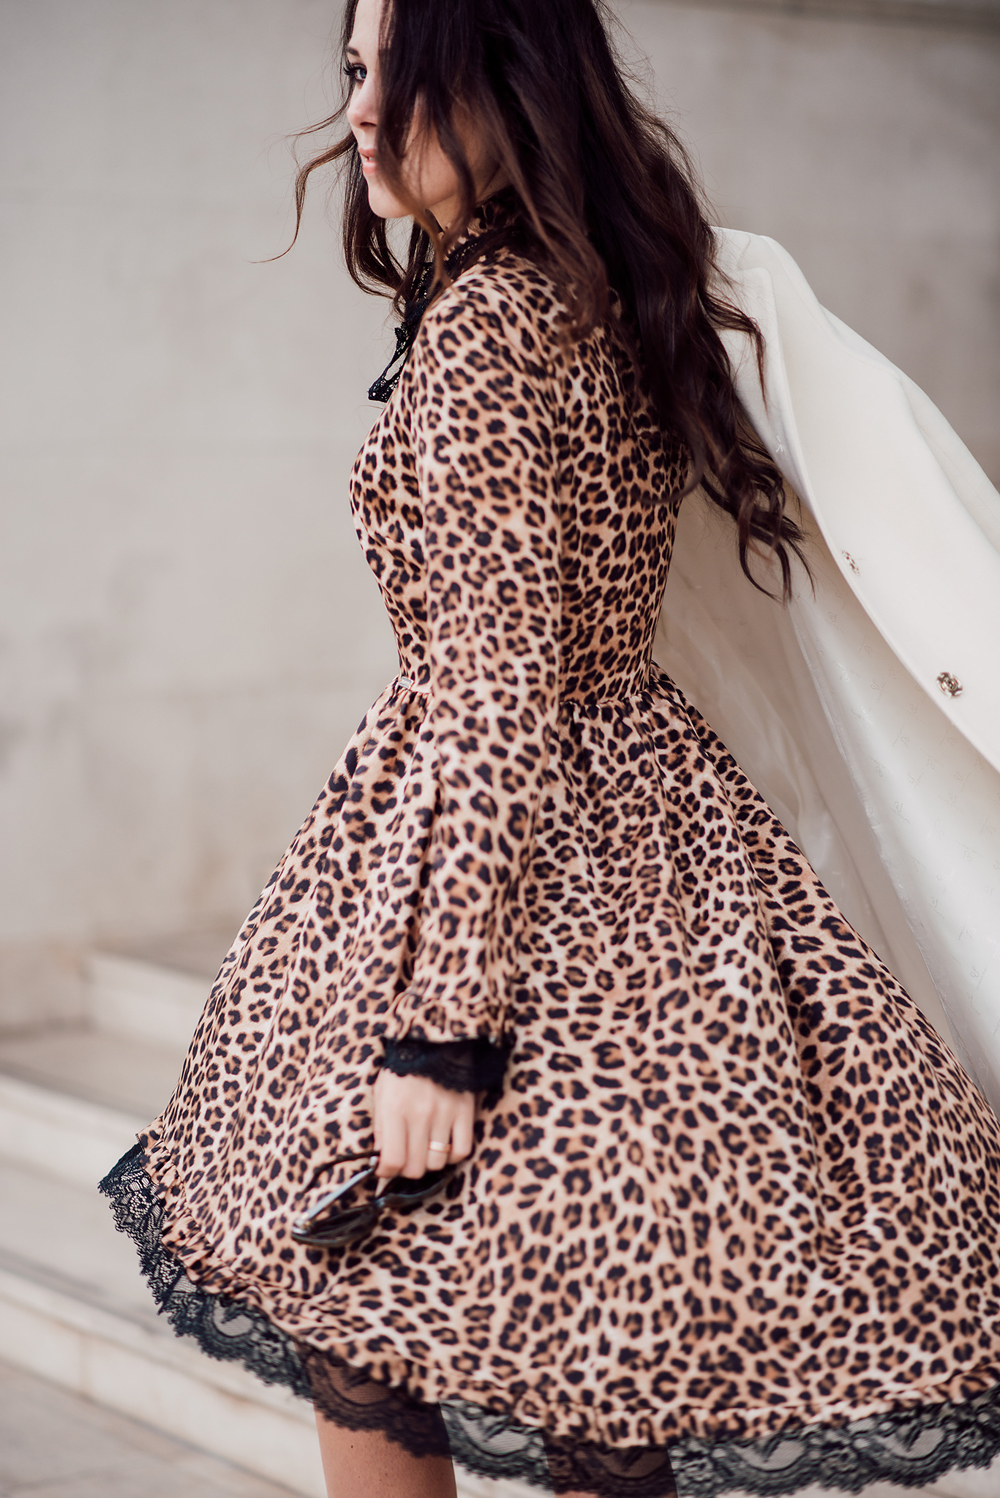 eva-ahacevcic_love-eva_terminal3_ootd_leopard-print_dress_fashion-blogger-13